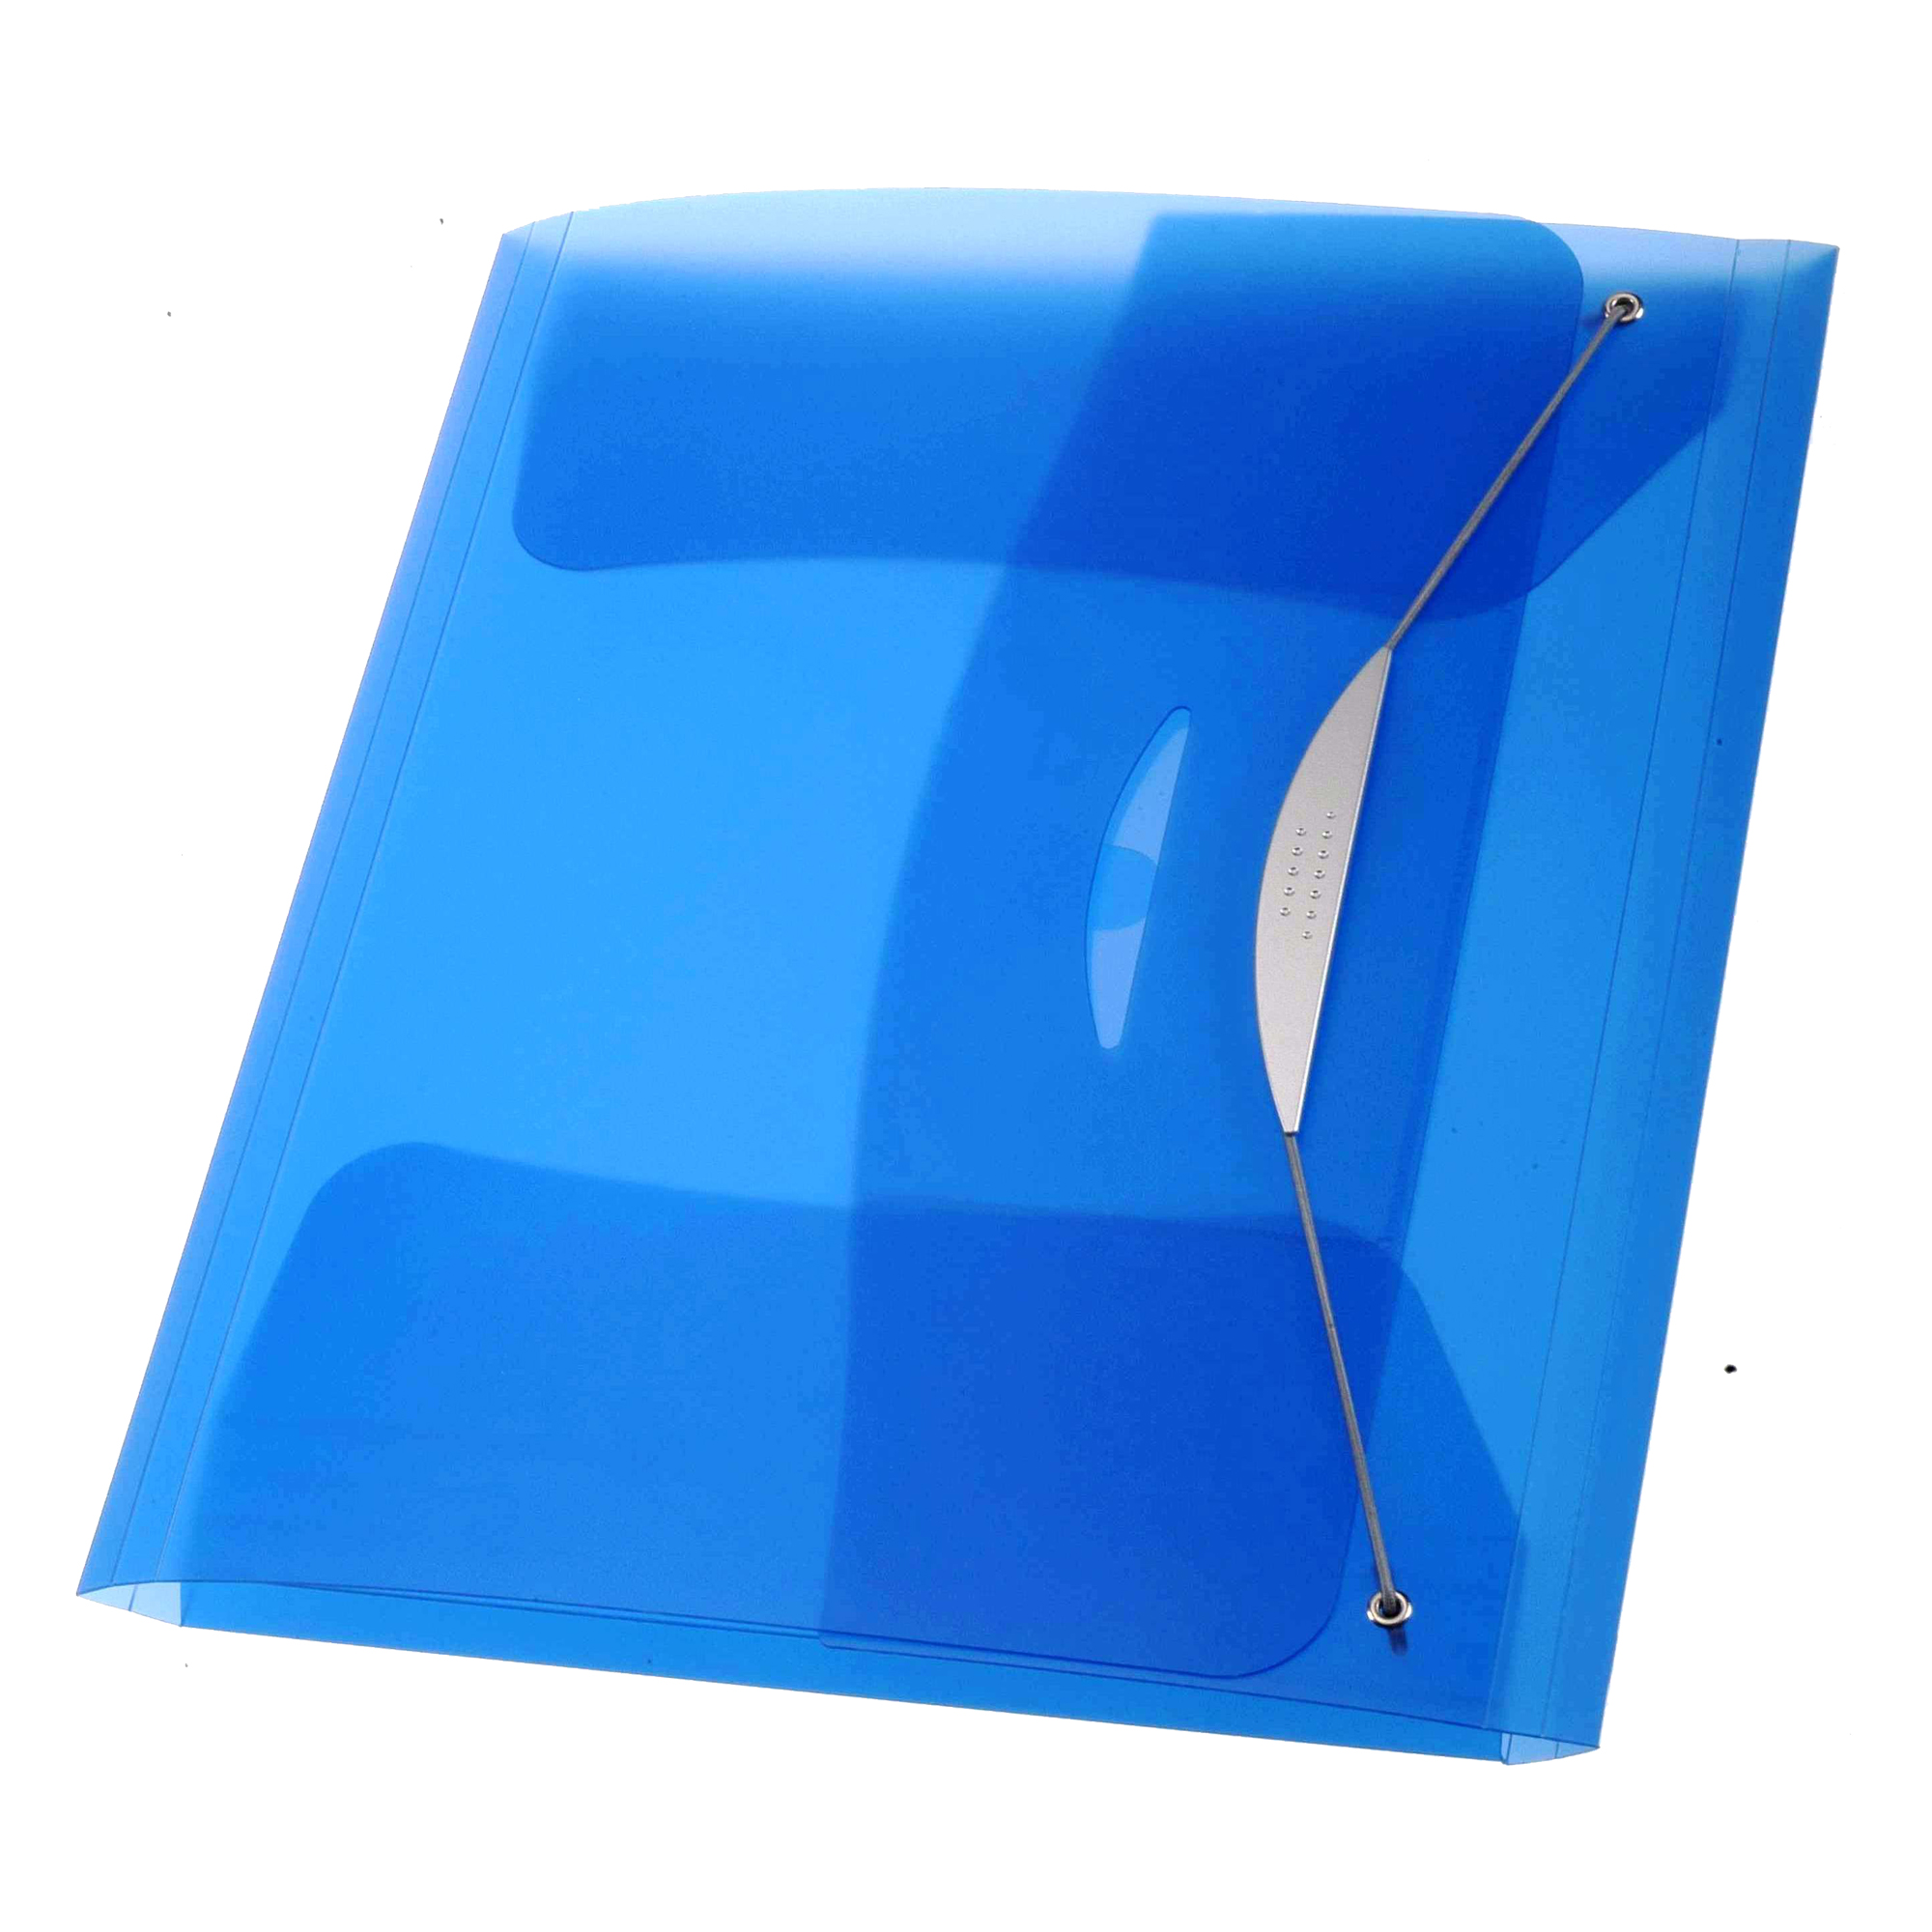 Cartellina con elastico Swing - PPL - 23,5x34,5 cm - blu - Fellowes su